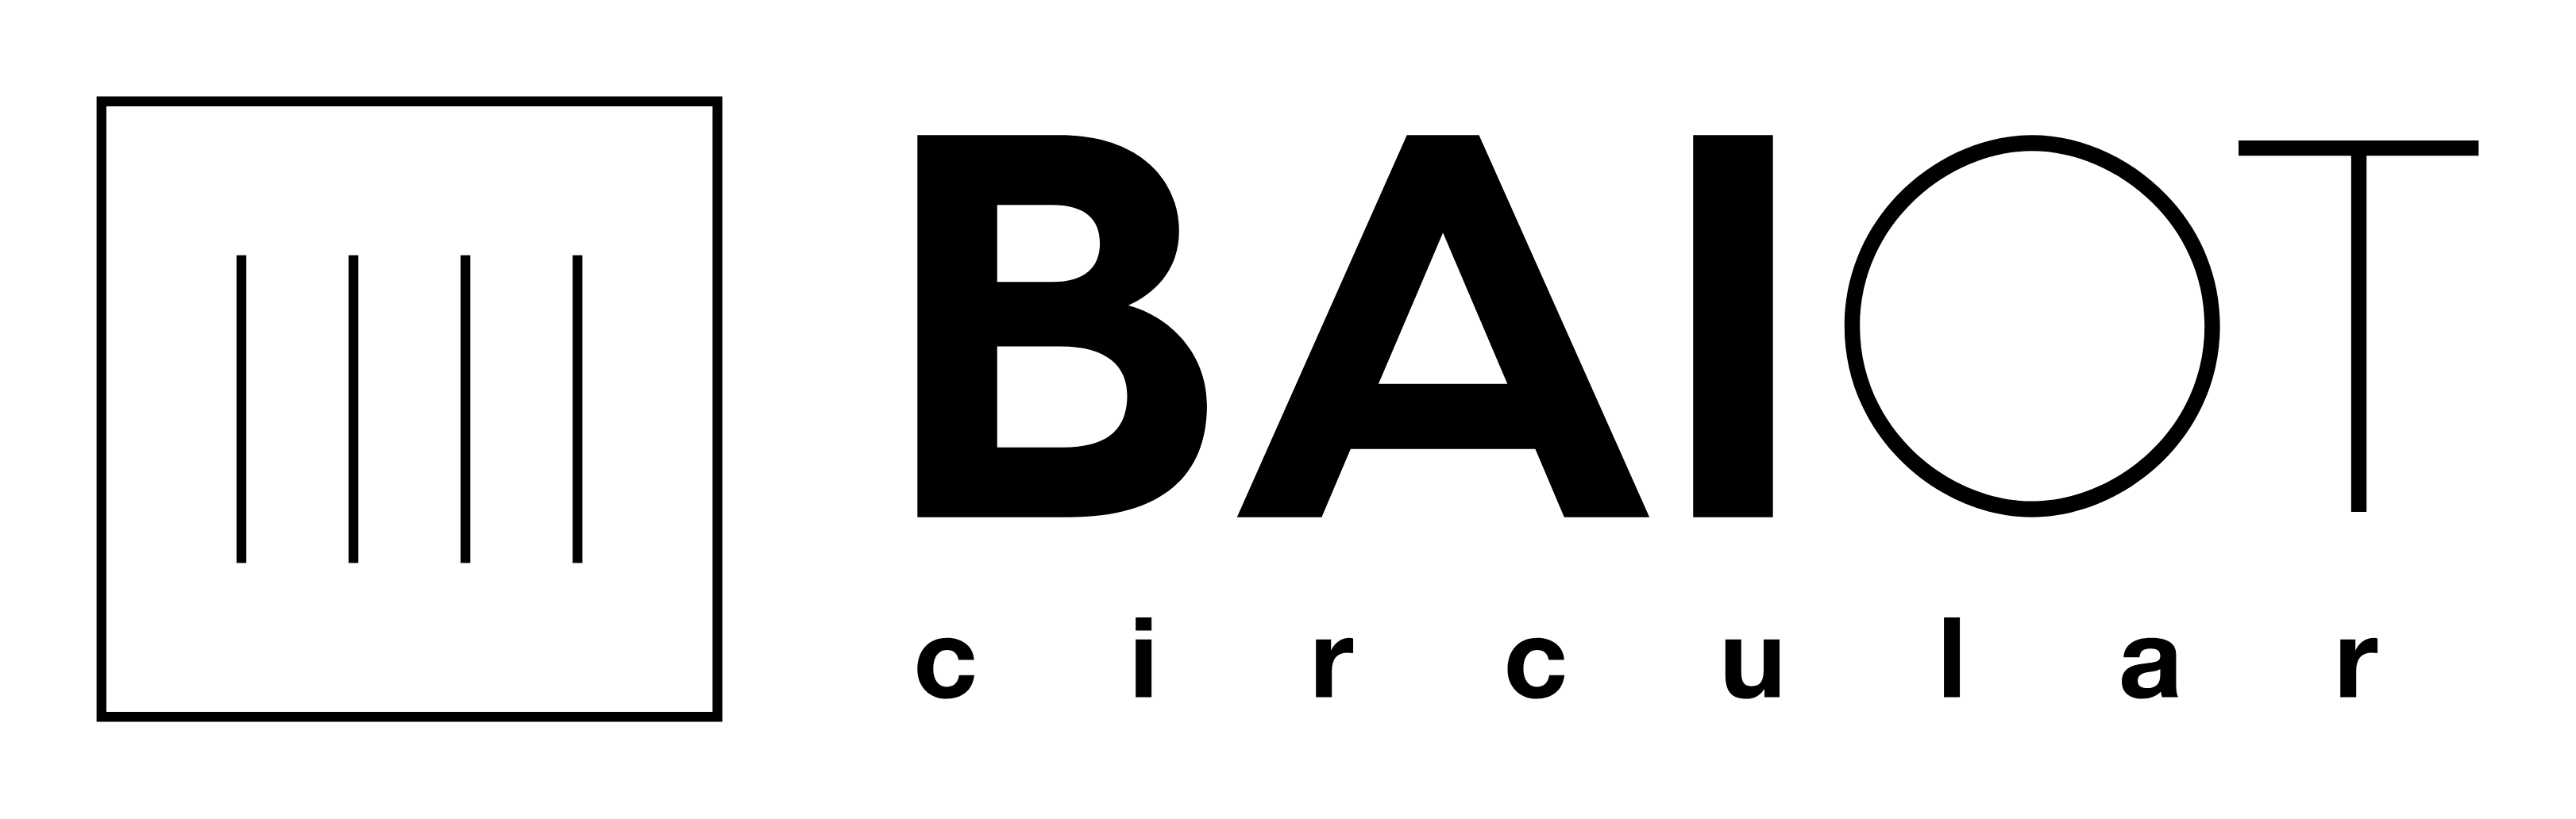 BAIOT-Black-logo-no-background